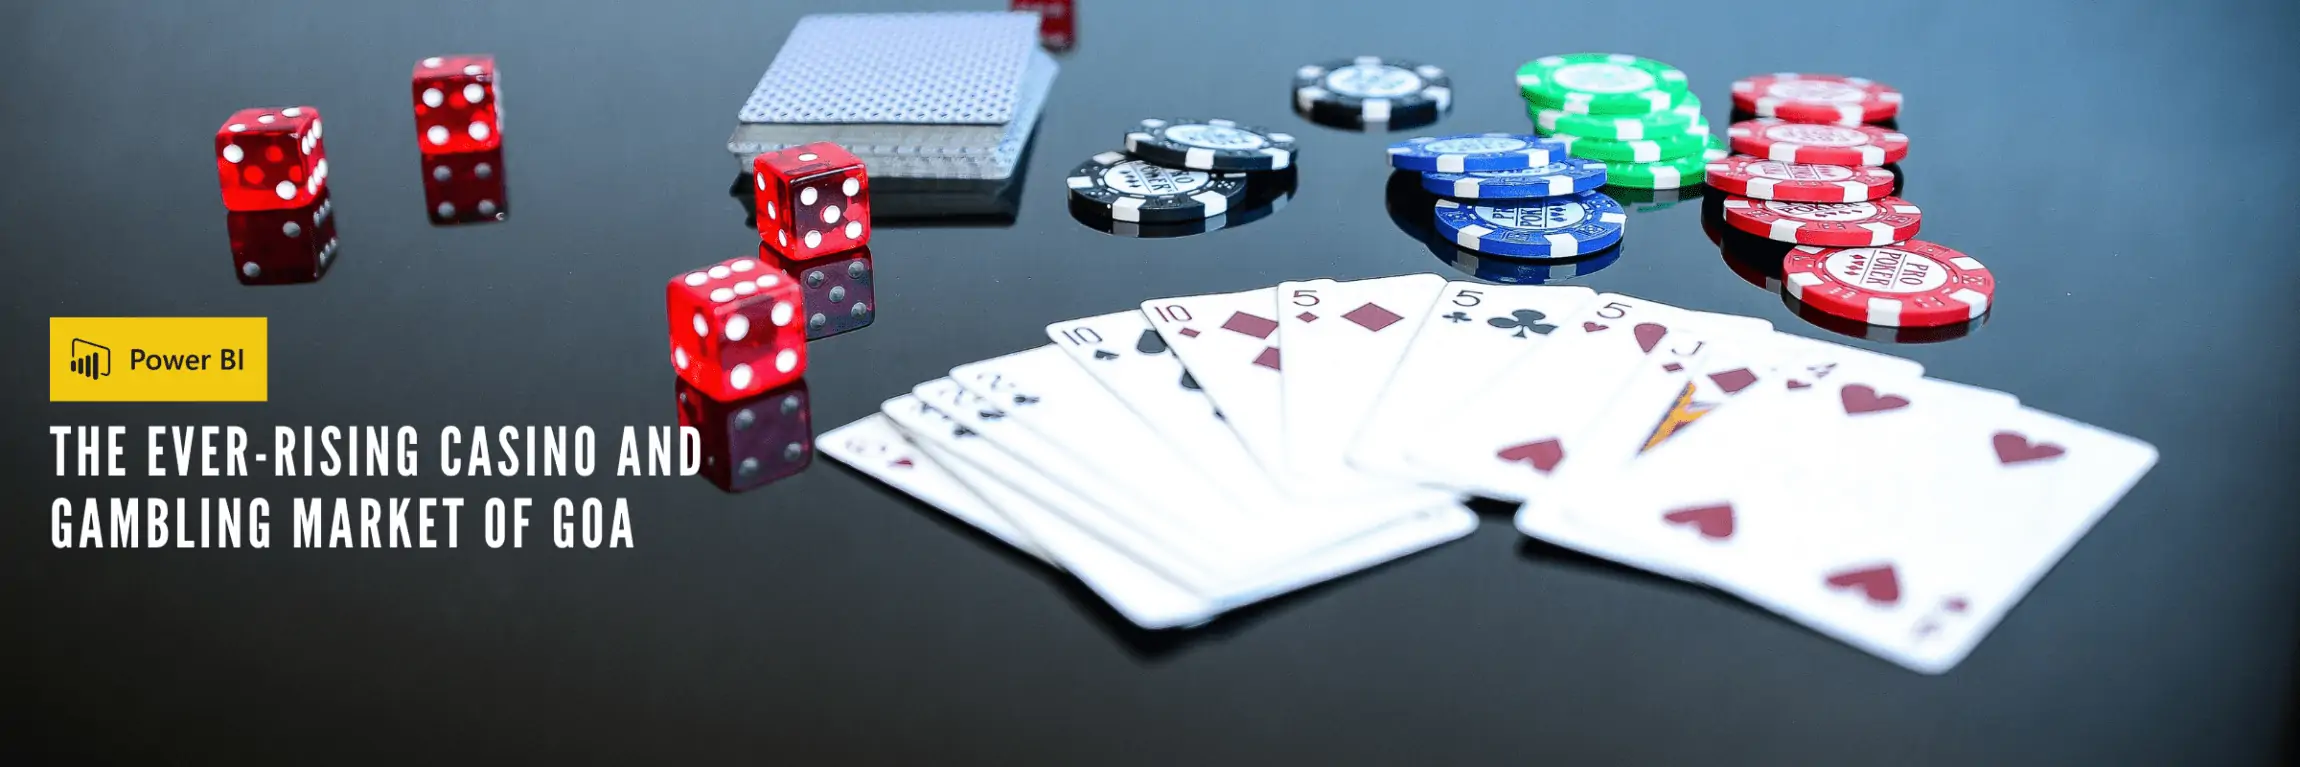 Rising Casino and Gambling Industry of Goa